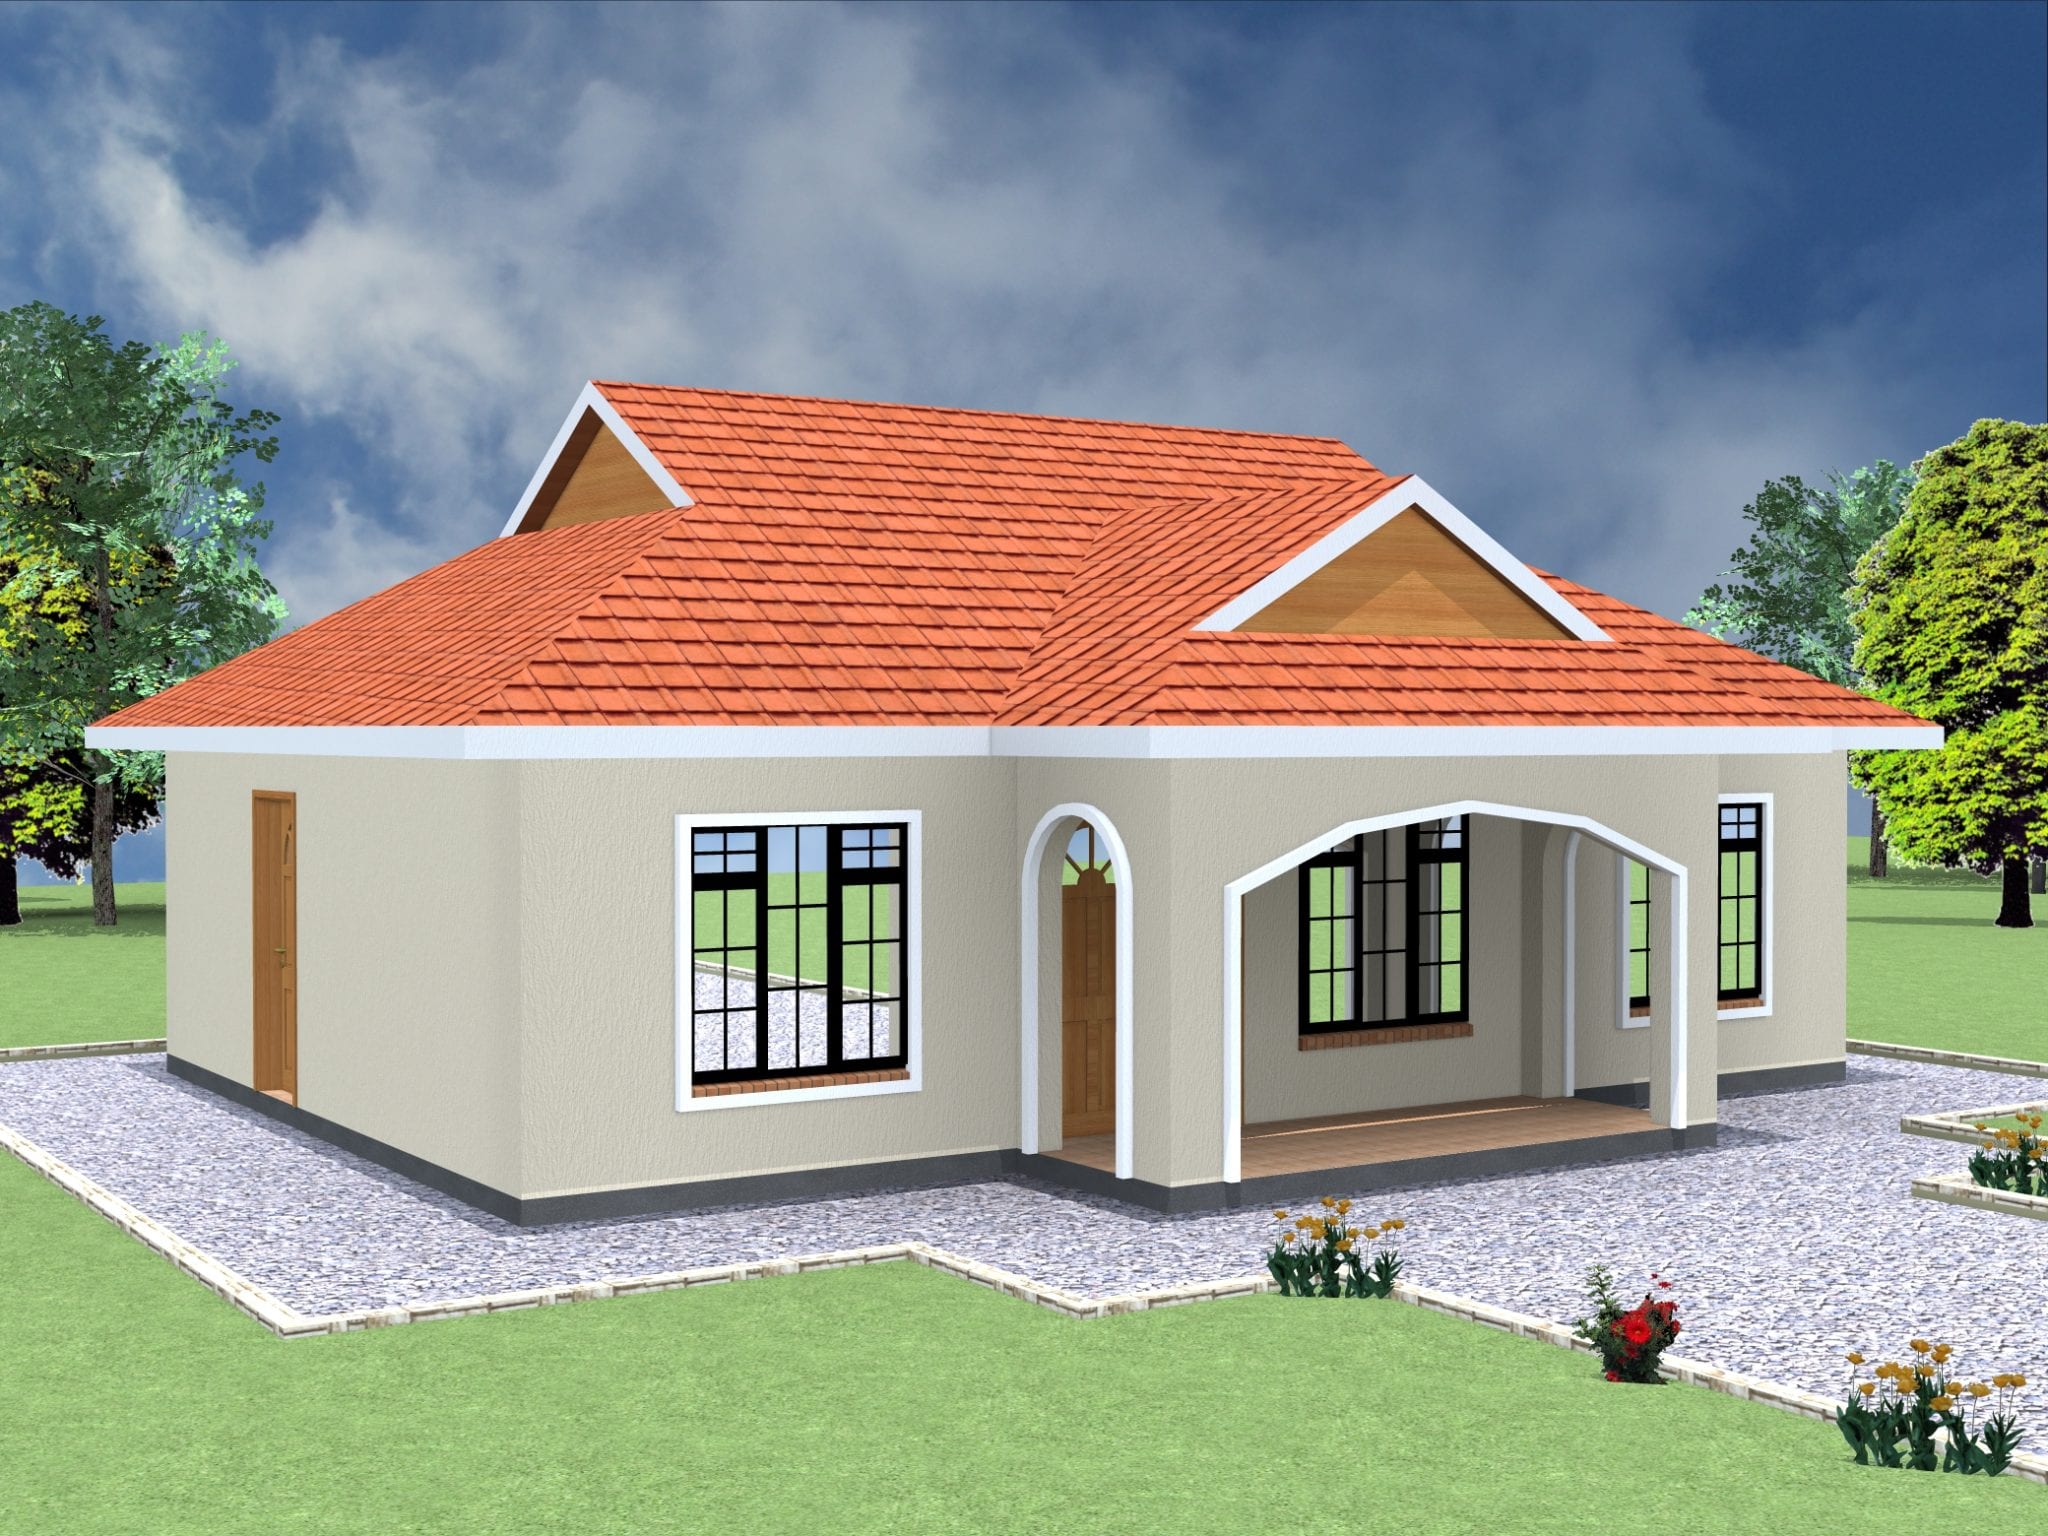 2 Bedroom House Plans In Kenya | Psoriasisguru.com